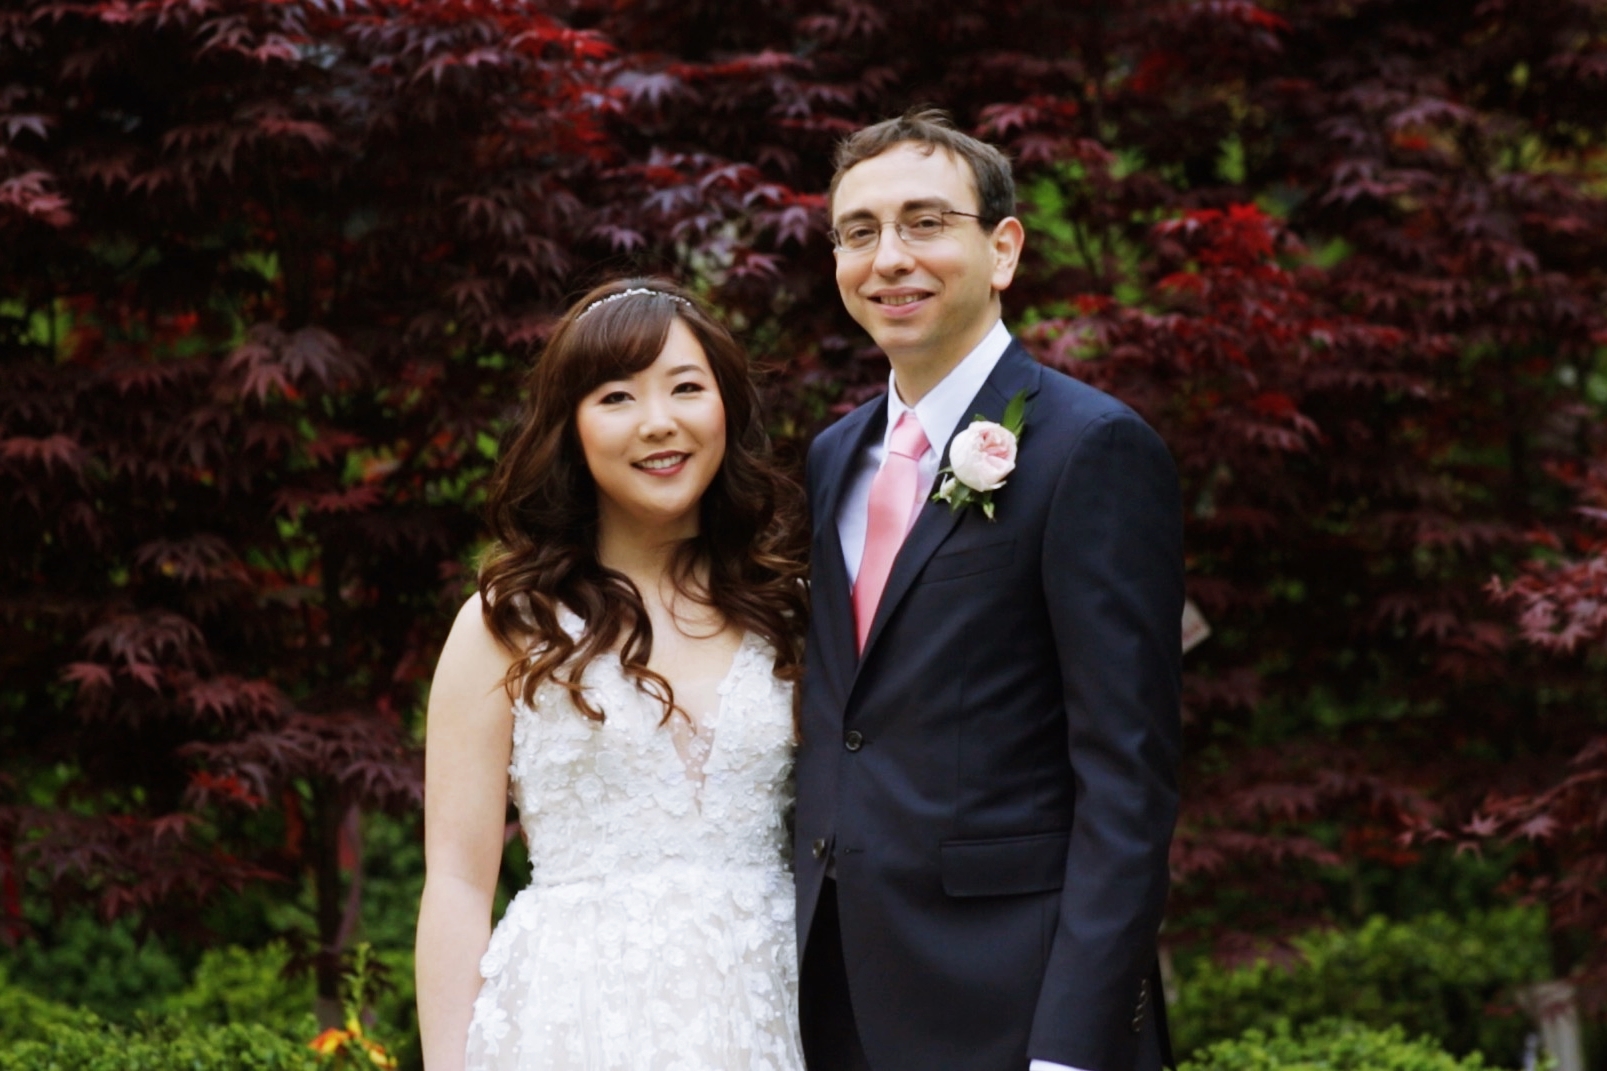 foundry wedding 3 - Meet The Foundry Wedding Sweepstakes Winners